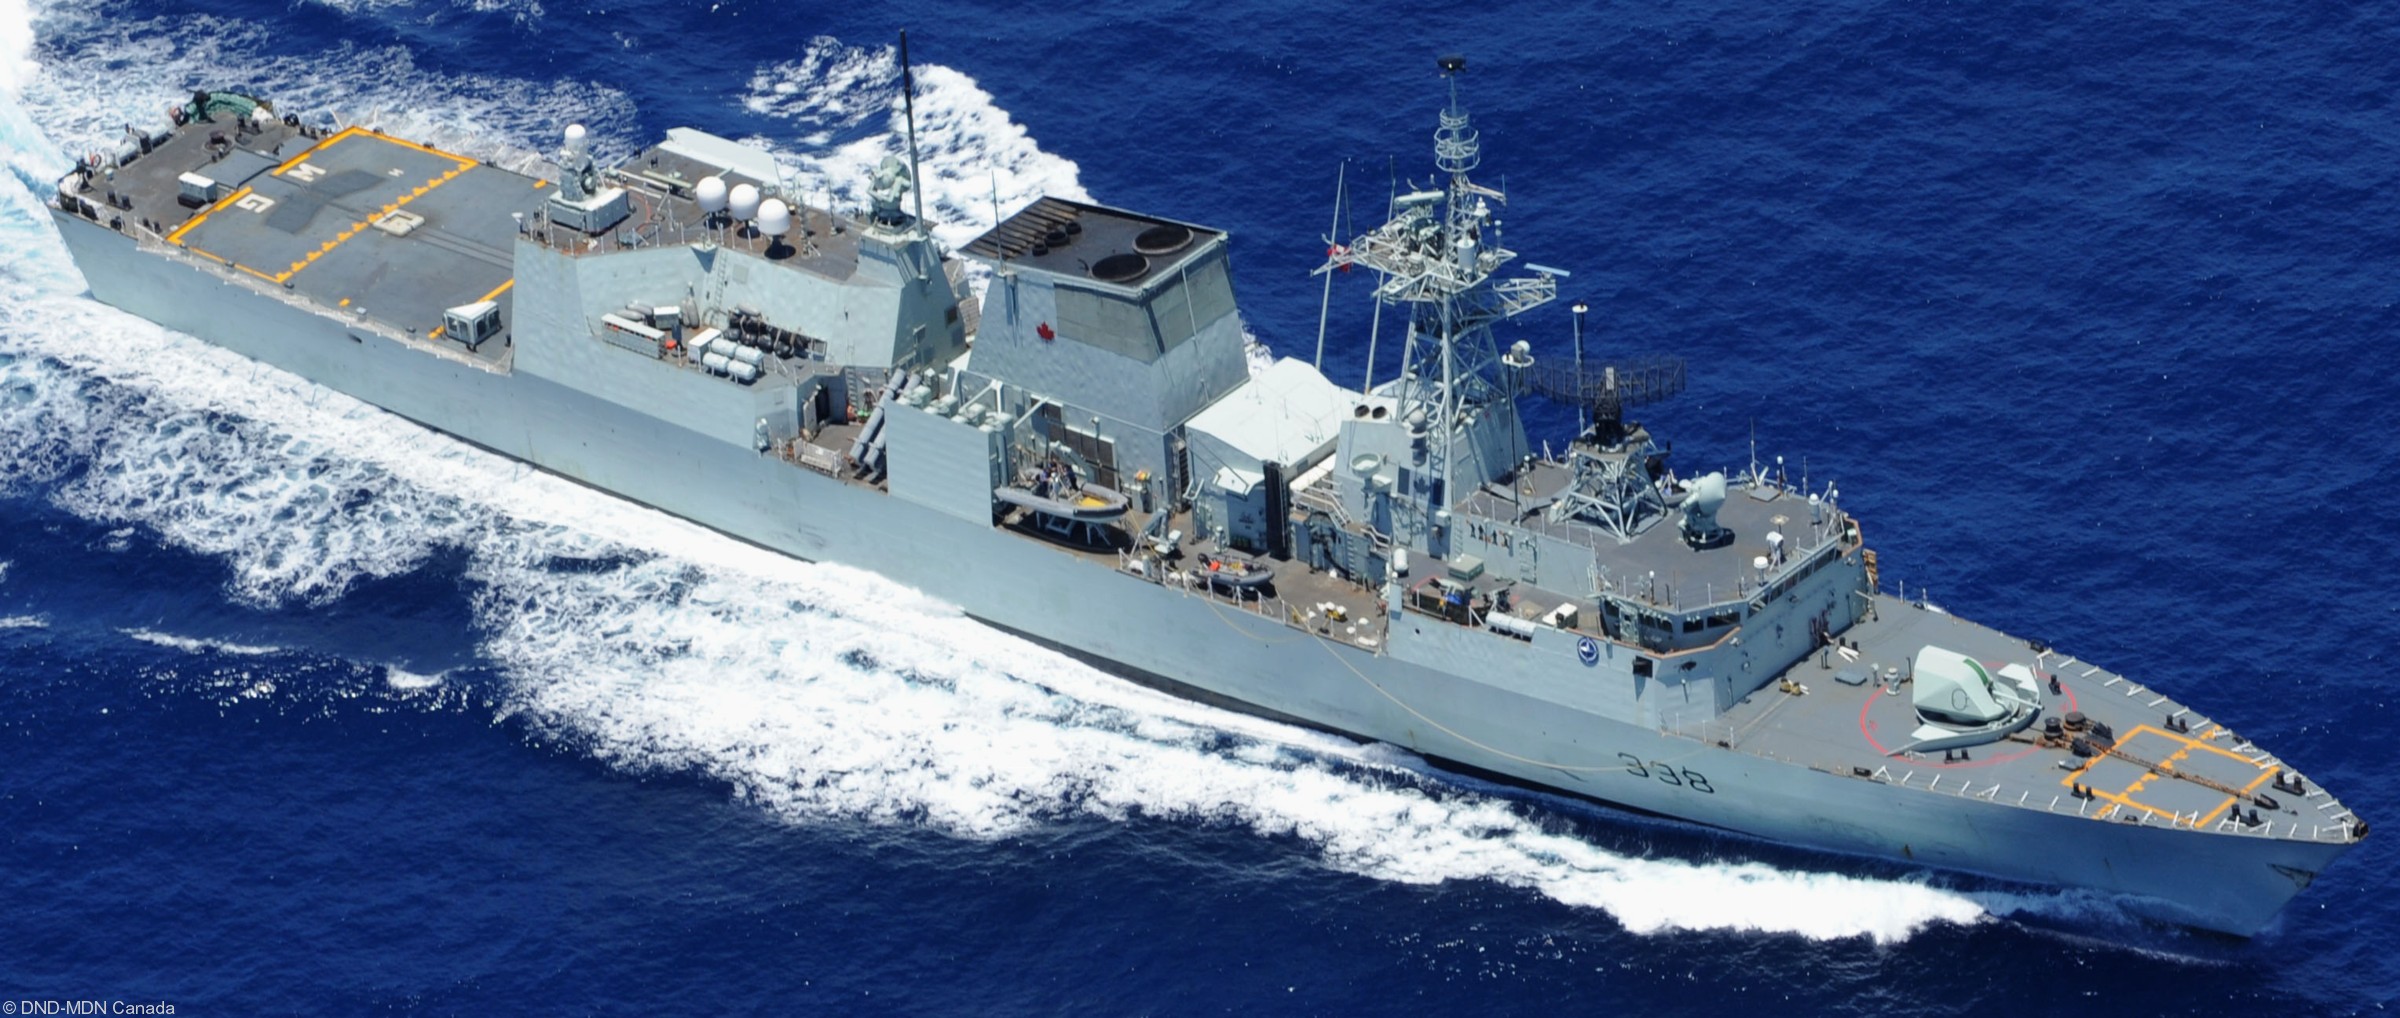 ffh-338 hmcs winnipeg halifax class helicopter patrol frigate ncsm royal canadian navy 14